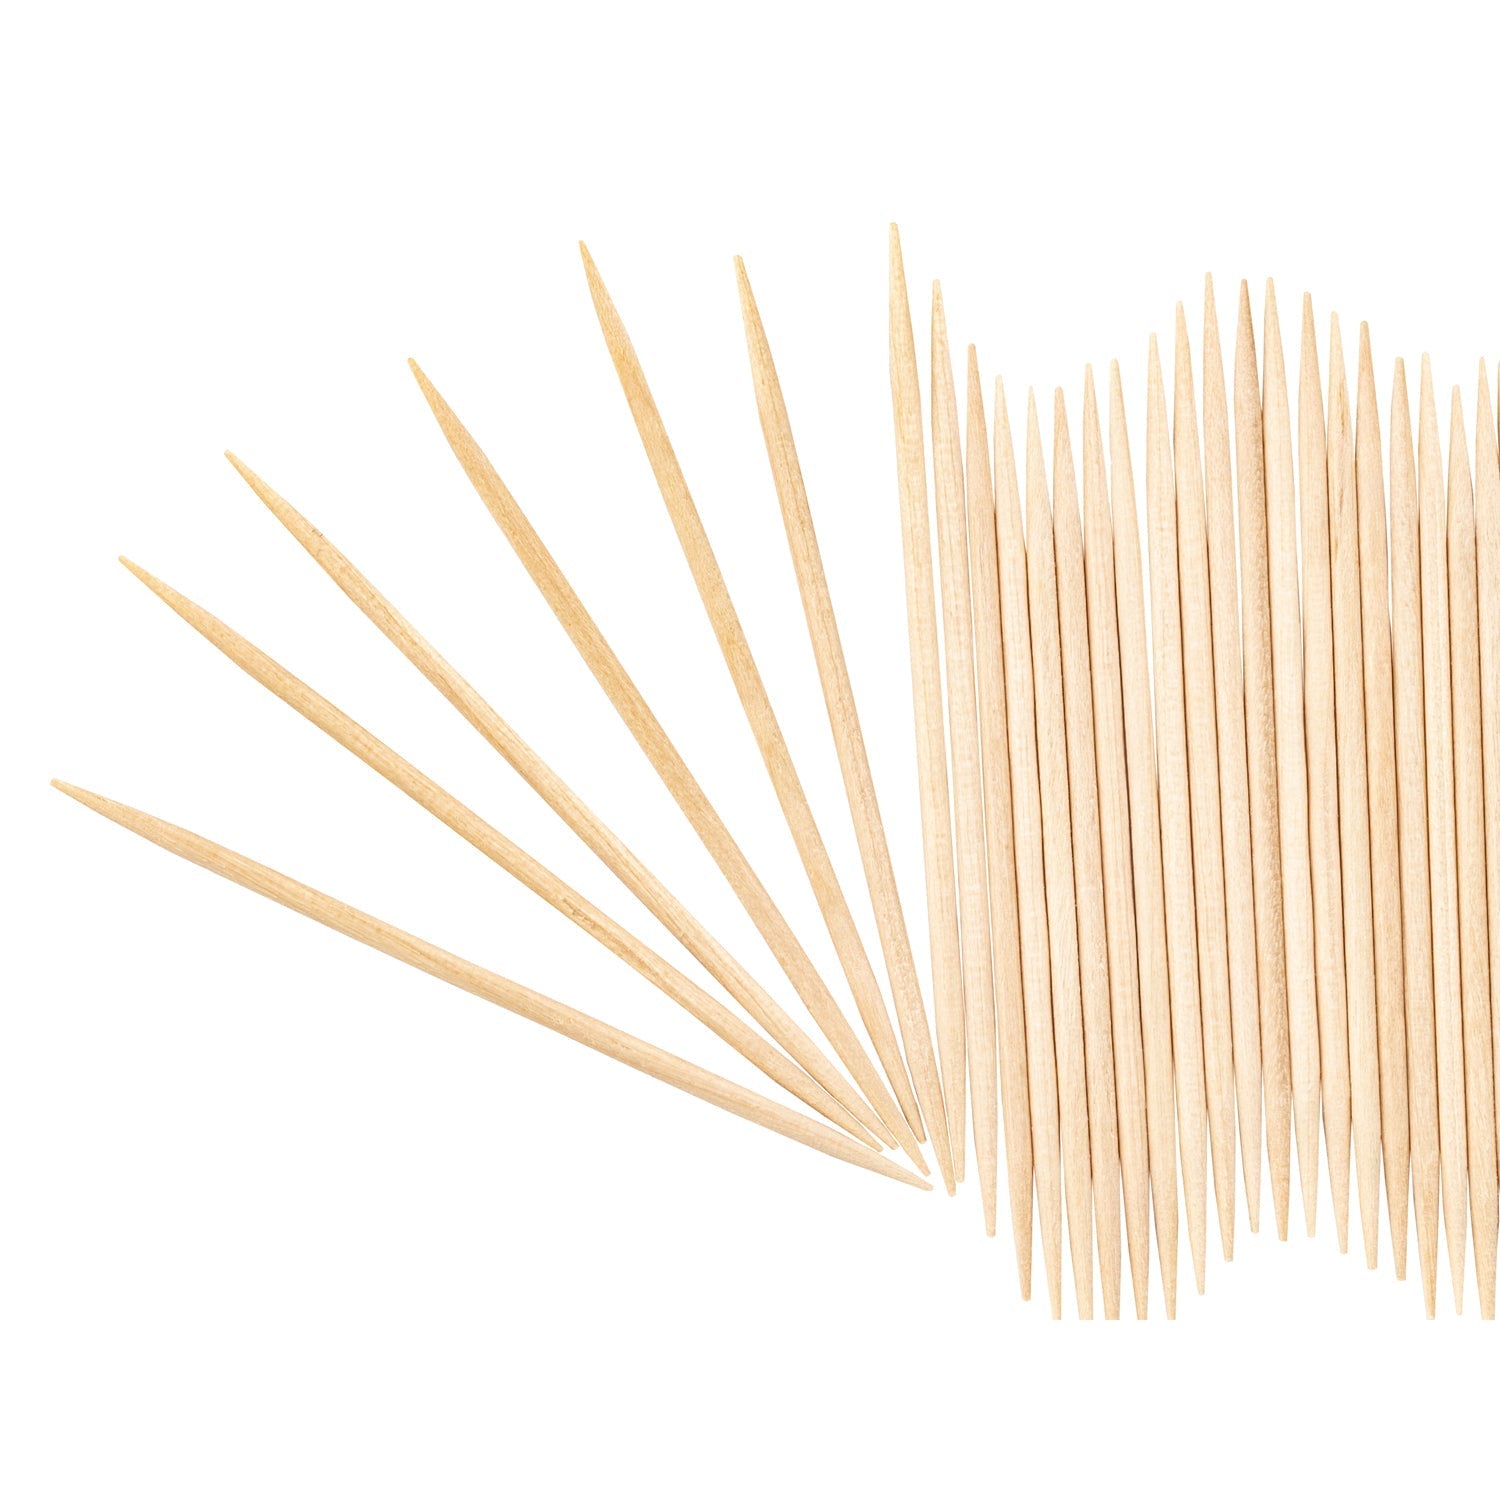 0847 Simple Wooden Toothpicks with Dispenser Box JK Trends